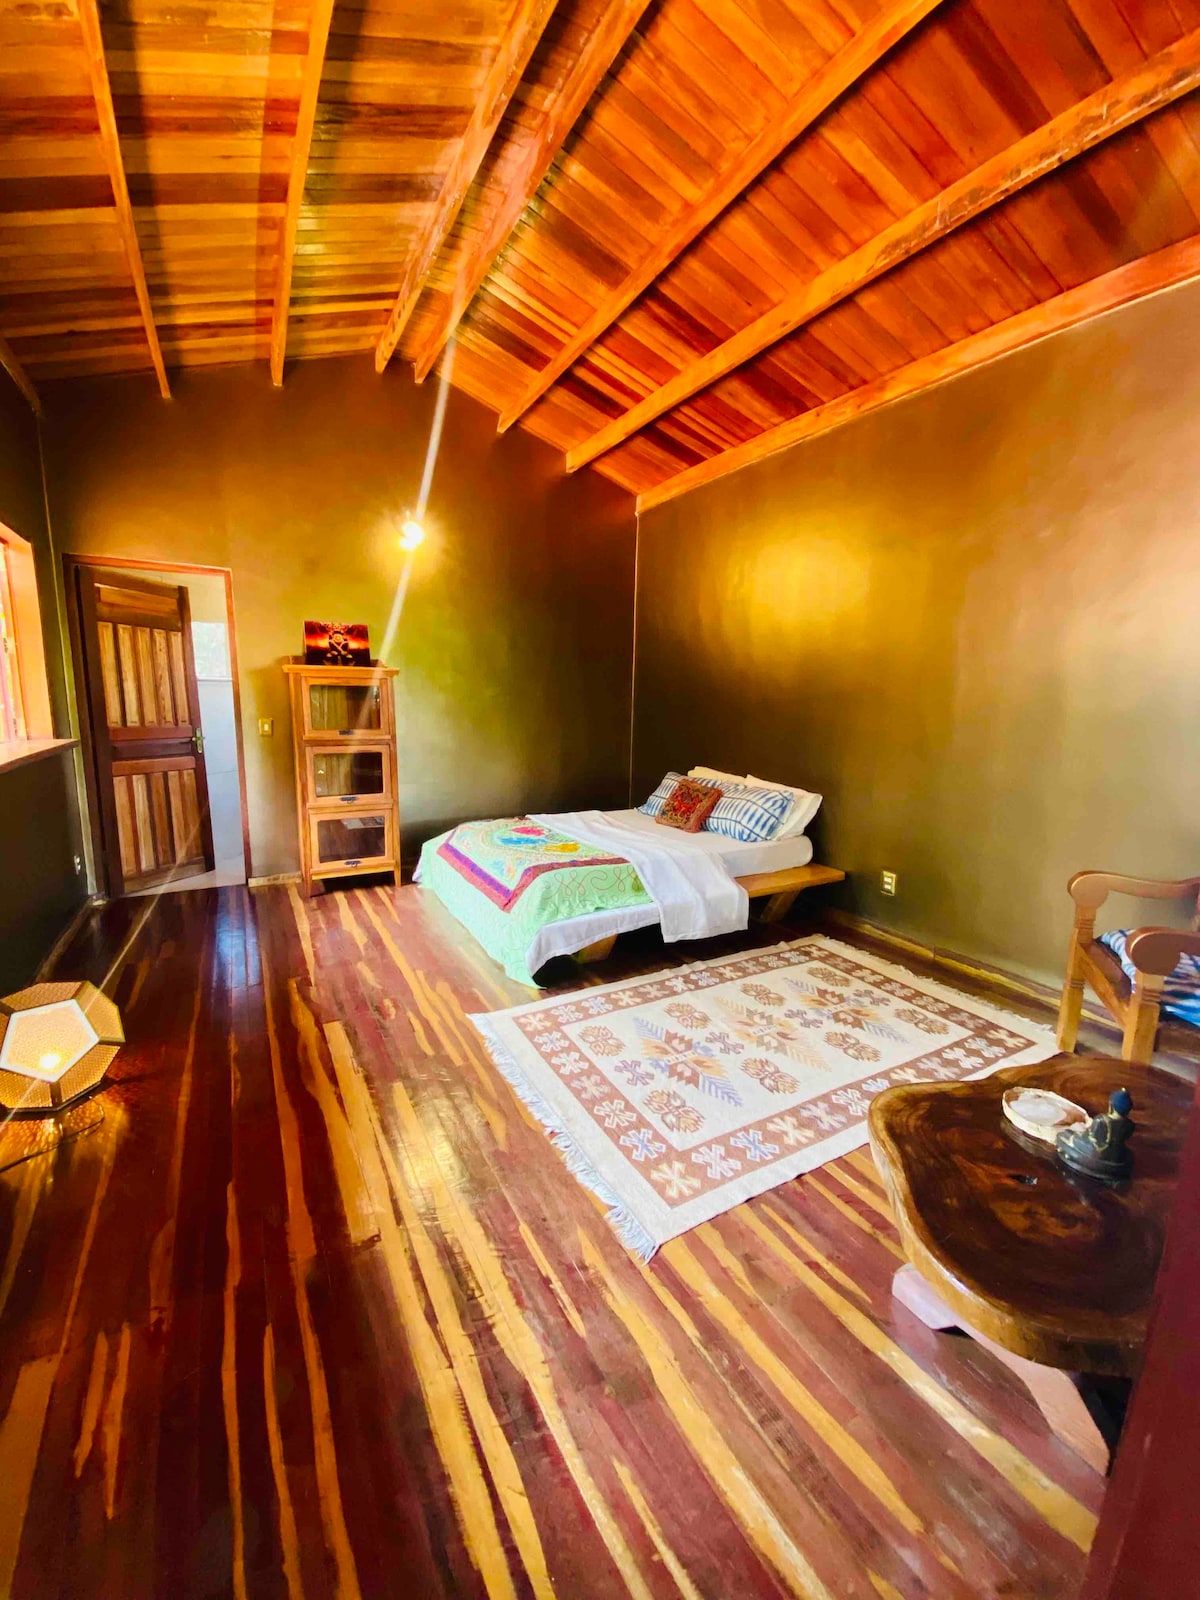 Golden dreams private room in nature lodge